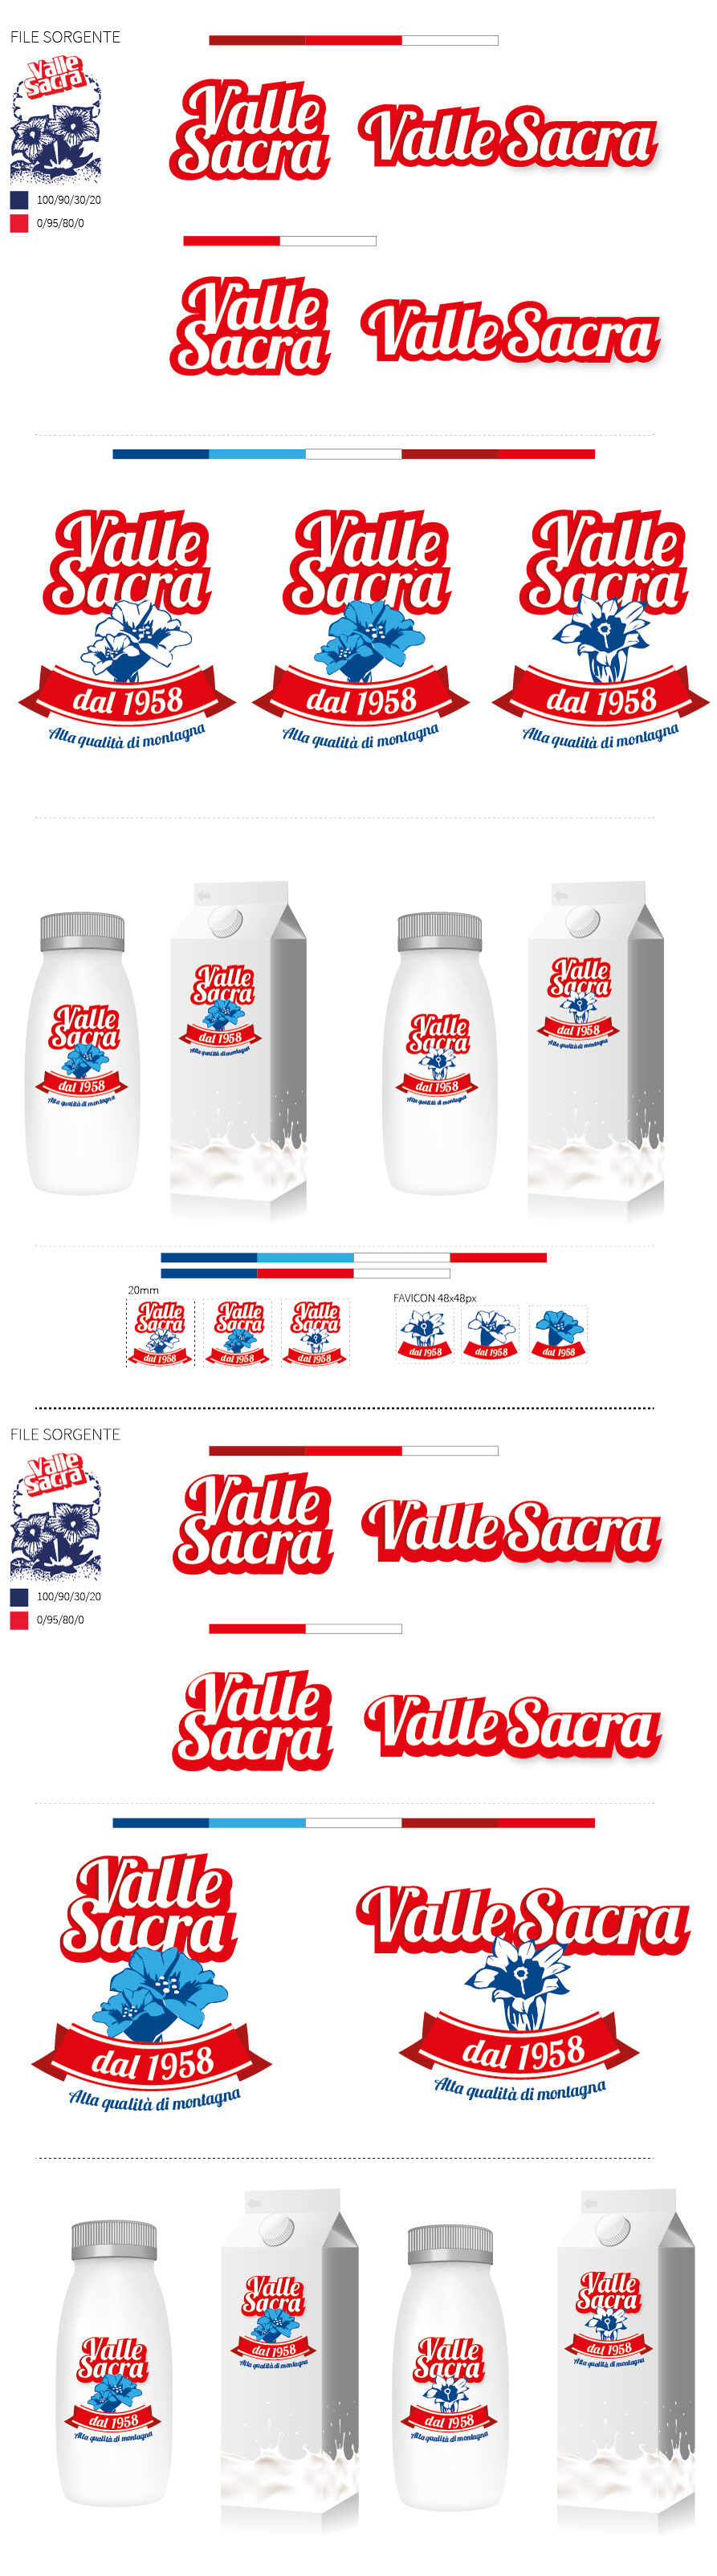 ads Advertising  brand identity packaging design Social media post visual